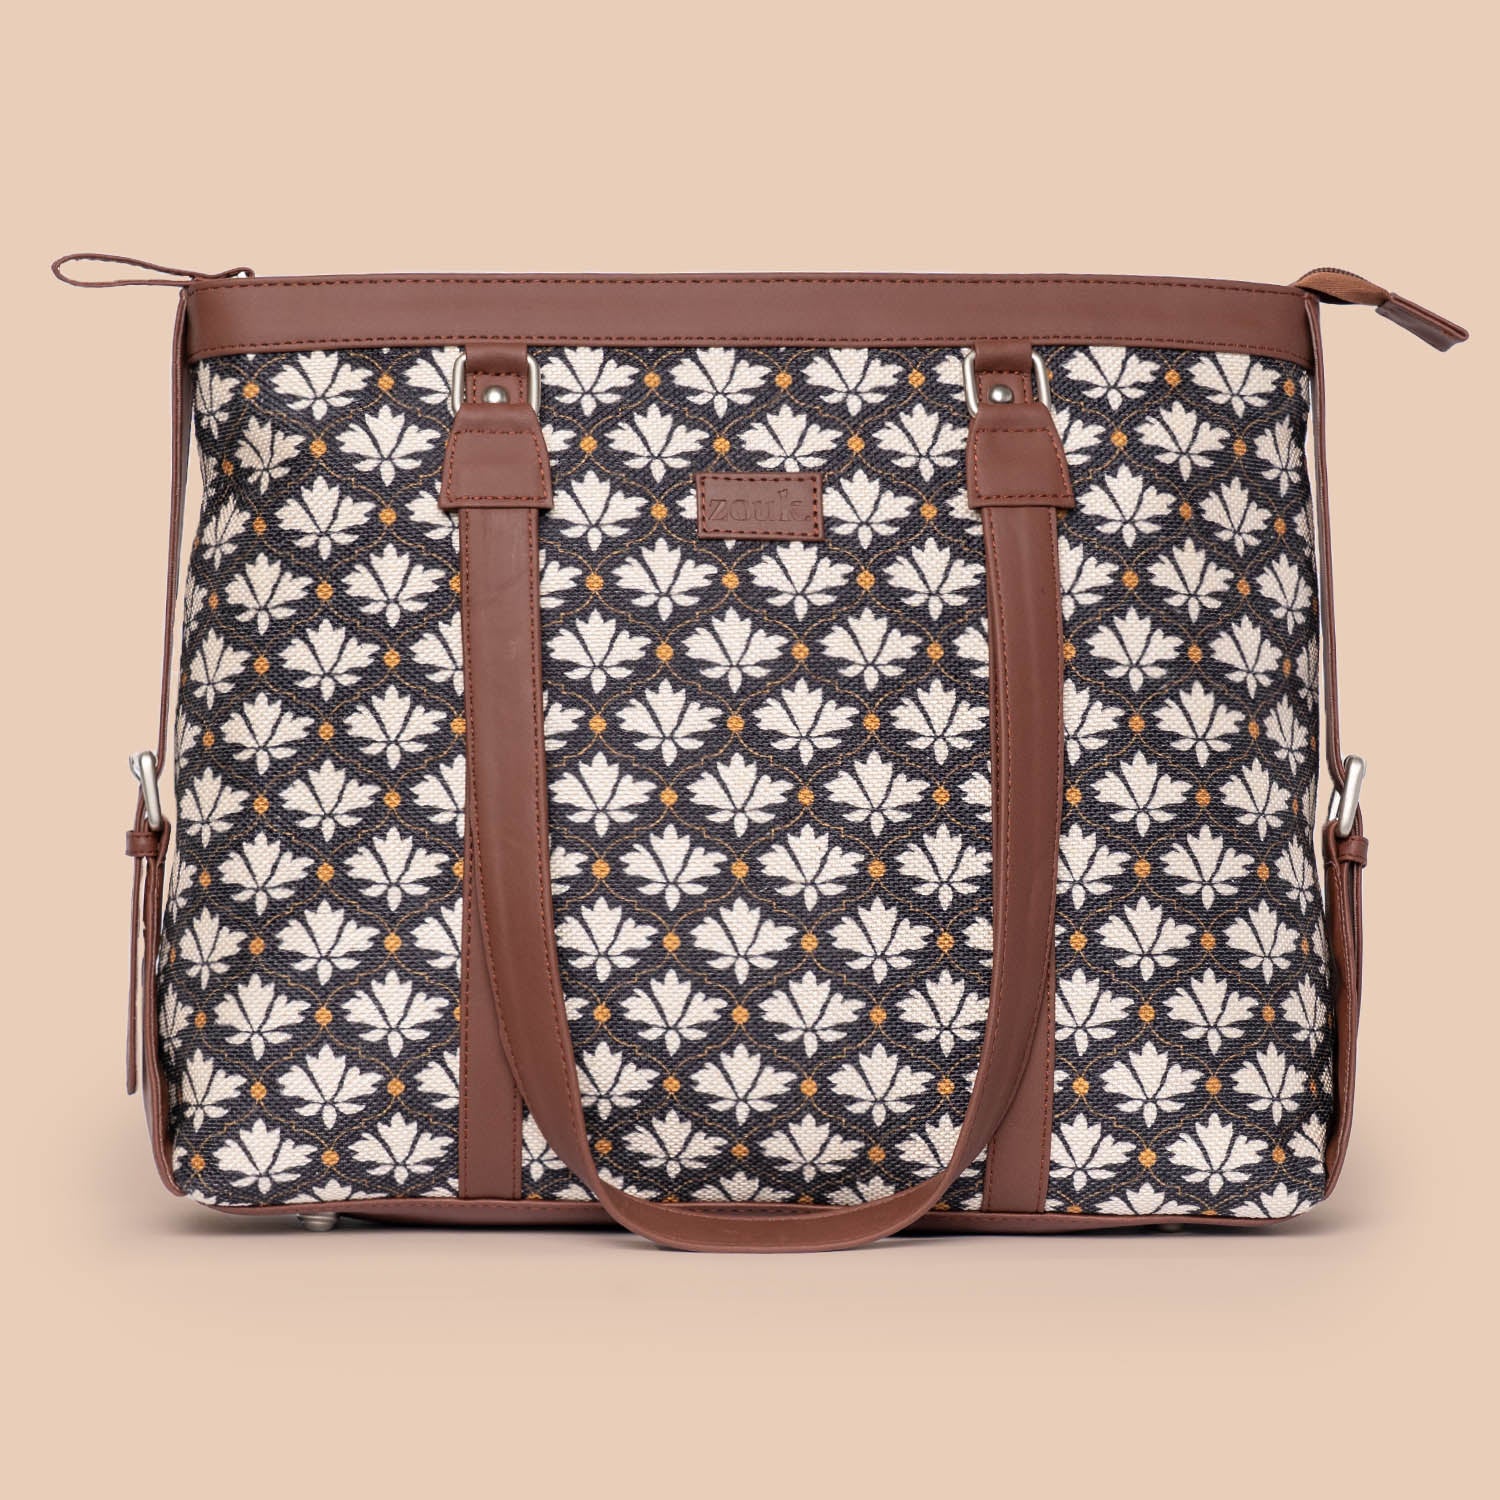 Trendy Women’s Designer Leather Laptop Bags for 14 inch Laptops